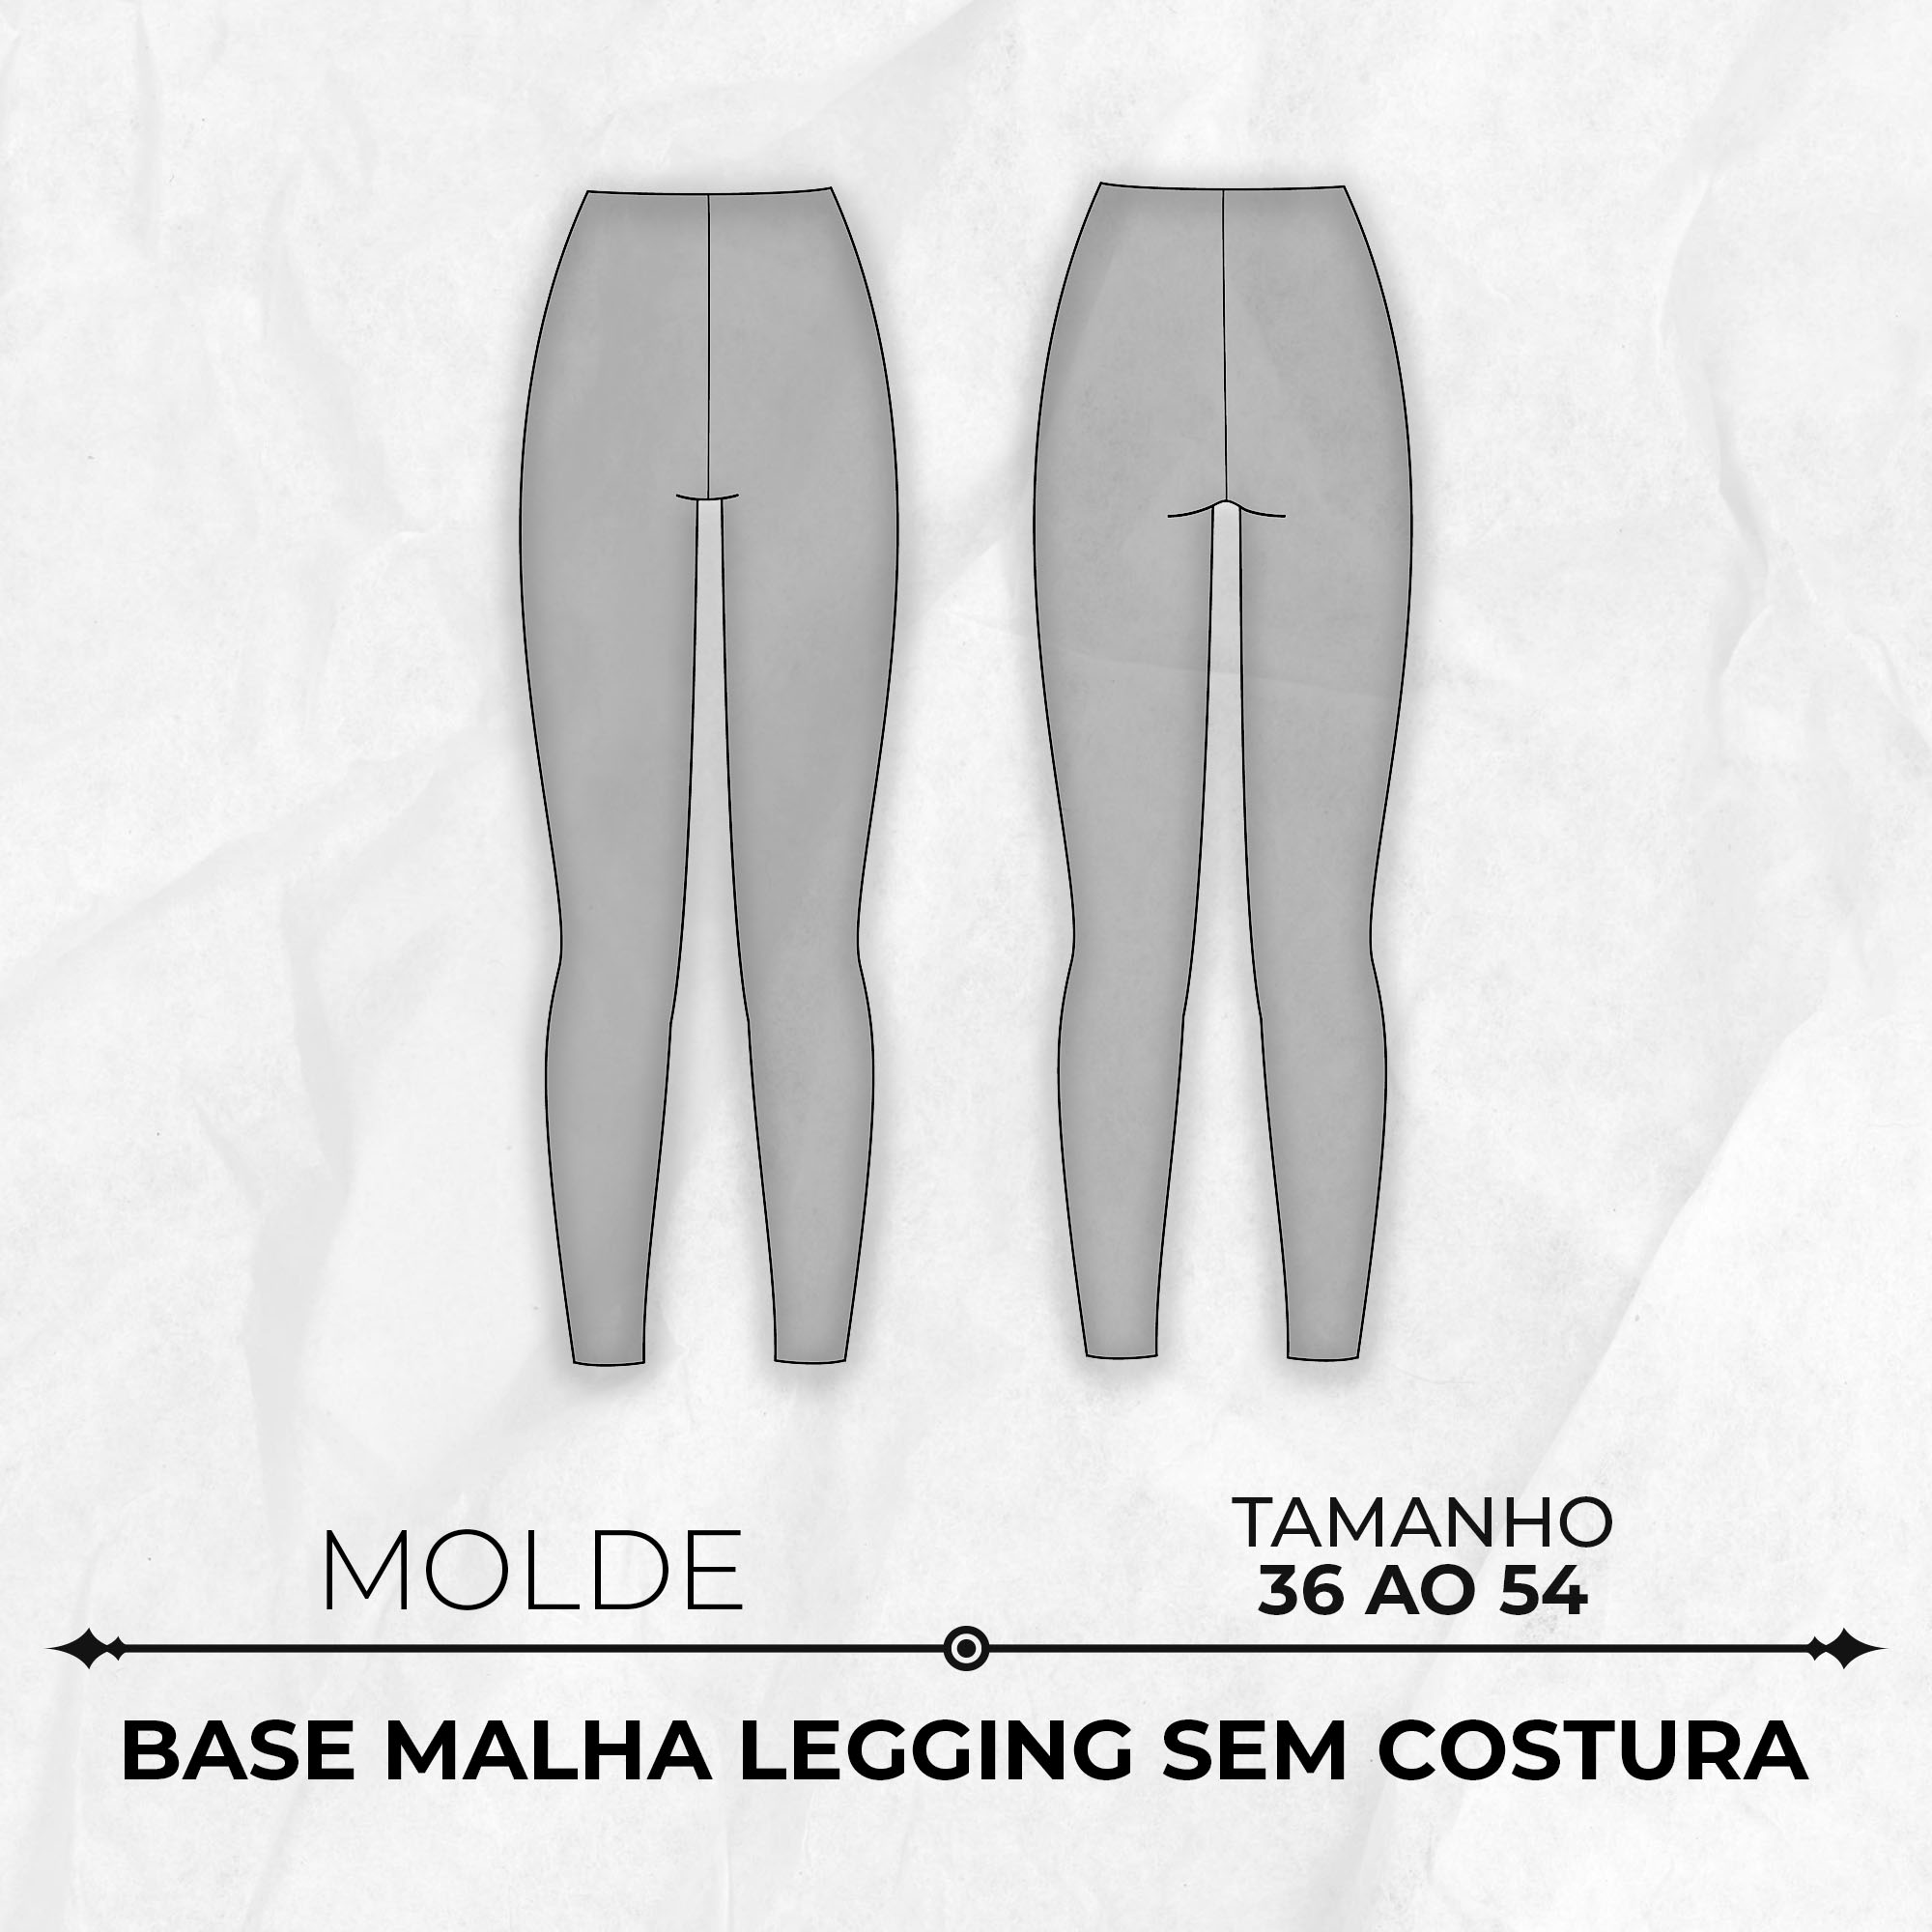 Molde base malha para legging sem costura lateral tamanho 36 ao 54 by Wania Machado